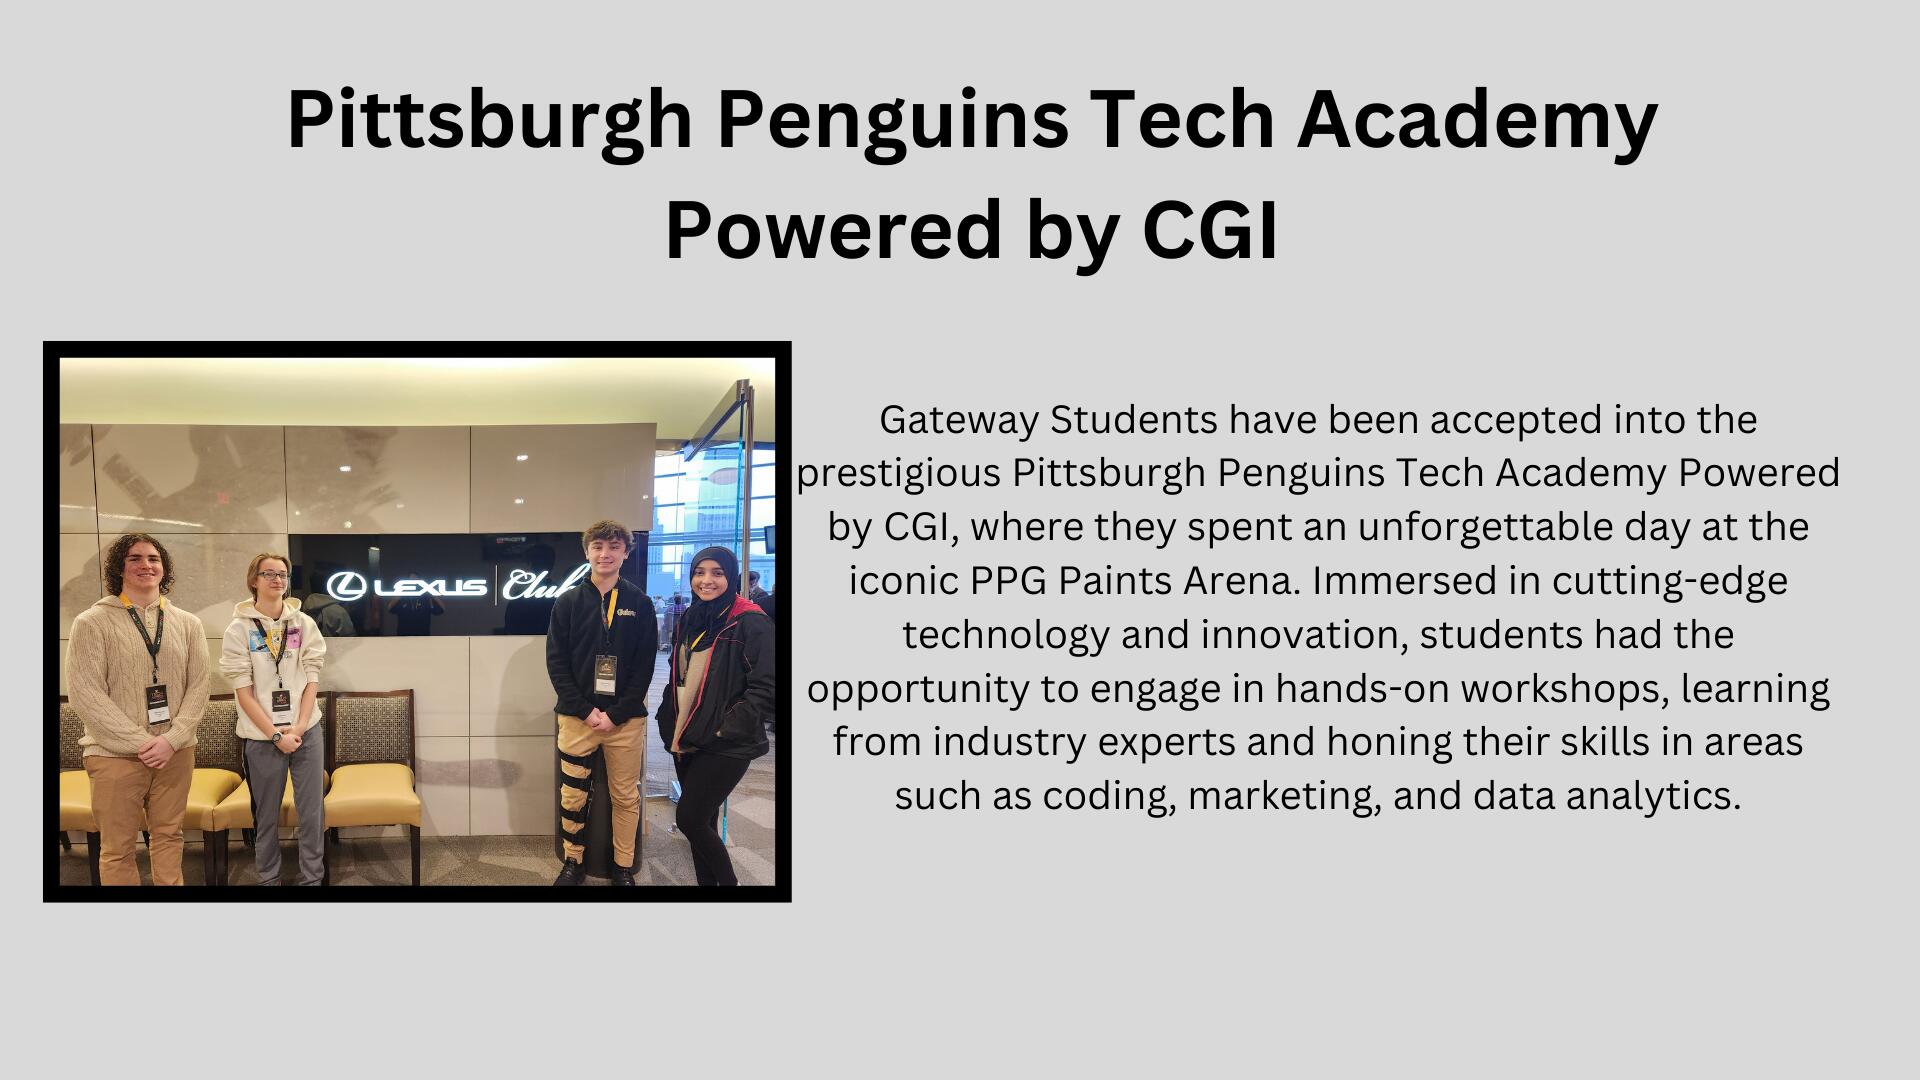 Gateway Students going to Pitt Penguins' Tech Academy